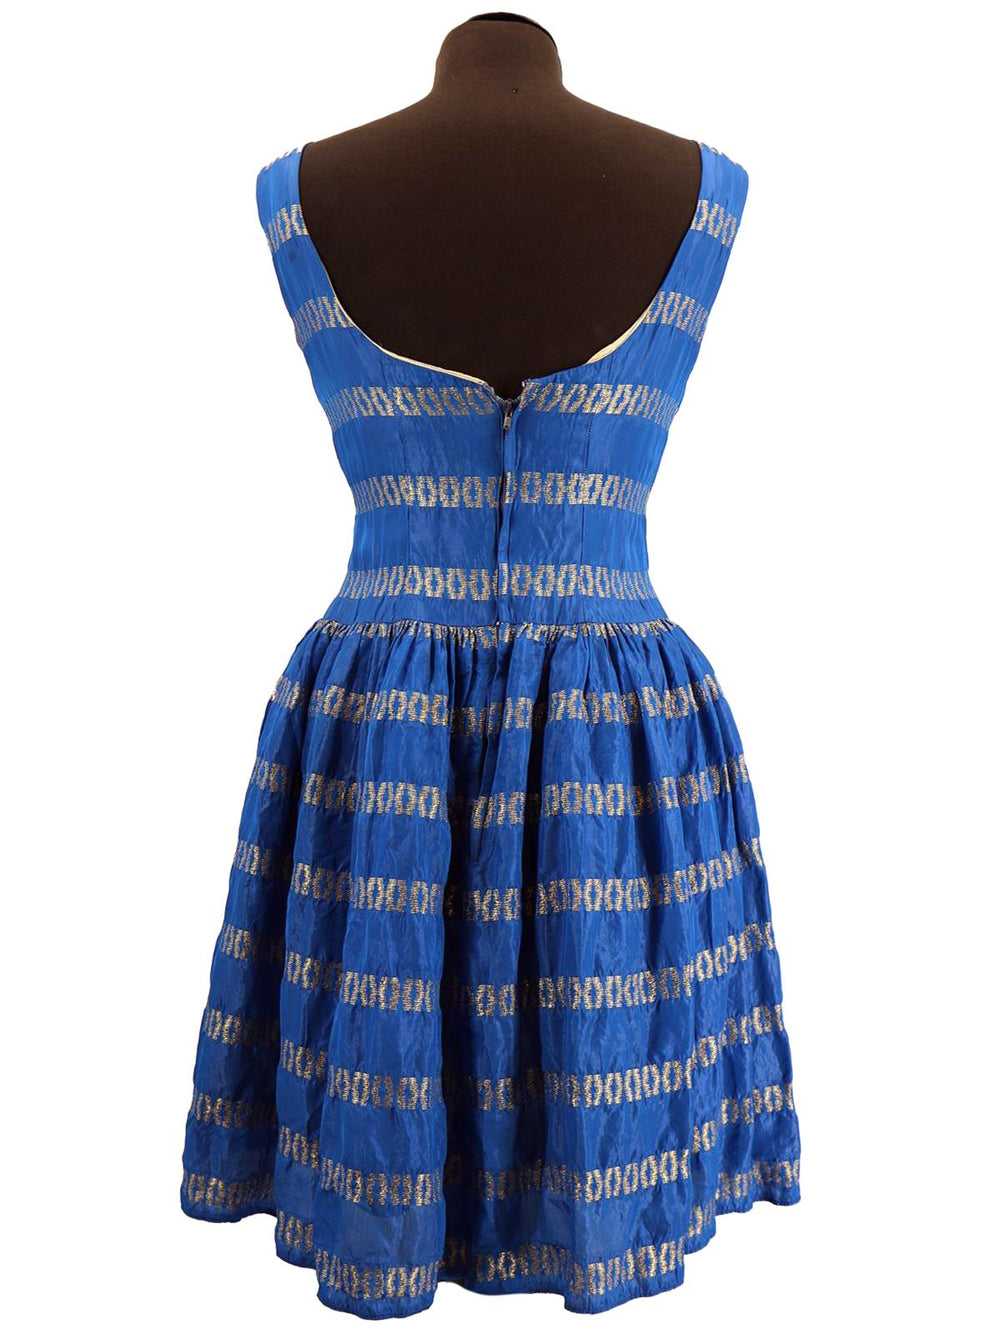 True Vintage Blue and Gold 1950s Dress - image 2